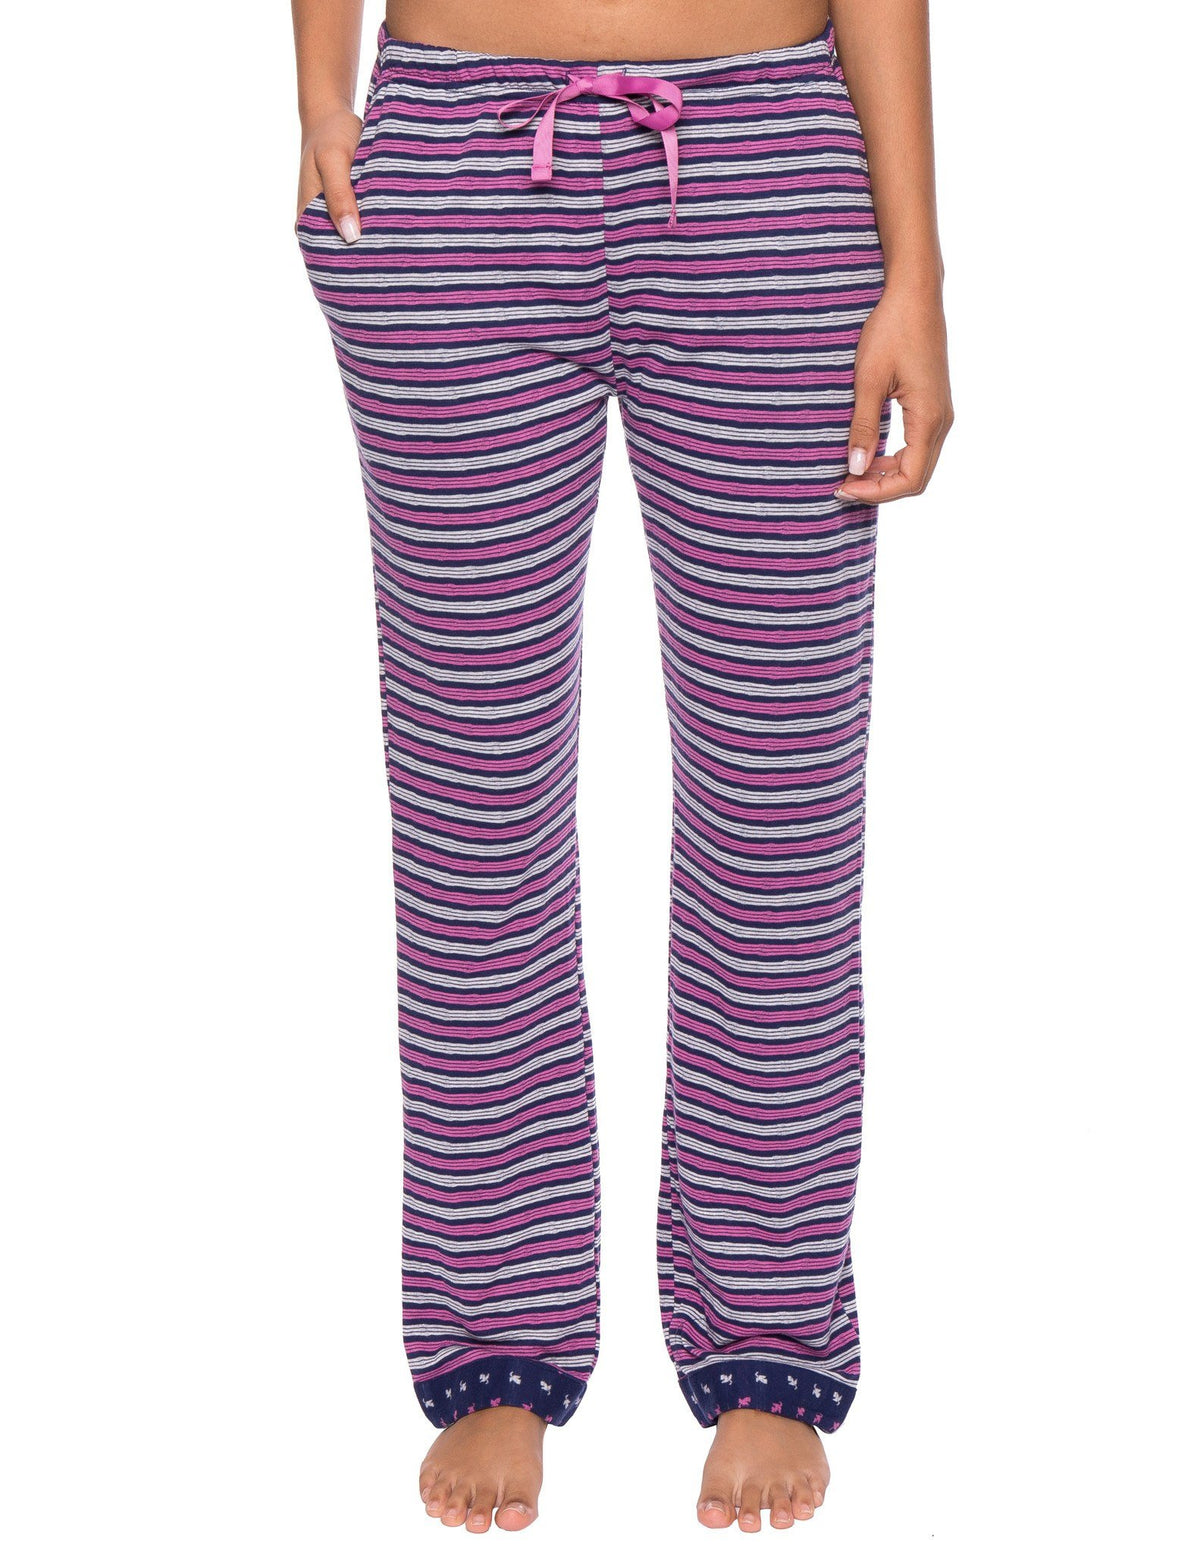 Women's Double Layer Knit Jersey Lounge Pants - Stripes Navy/Pink